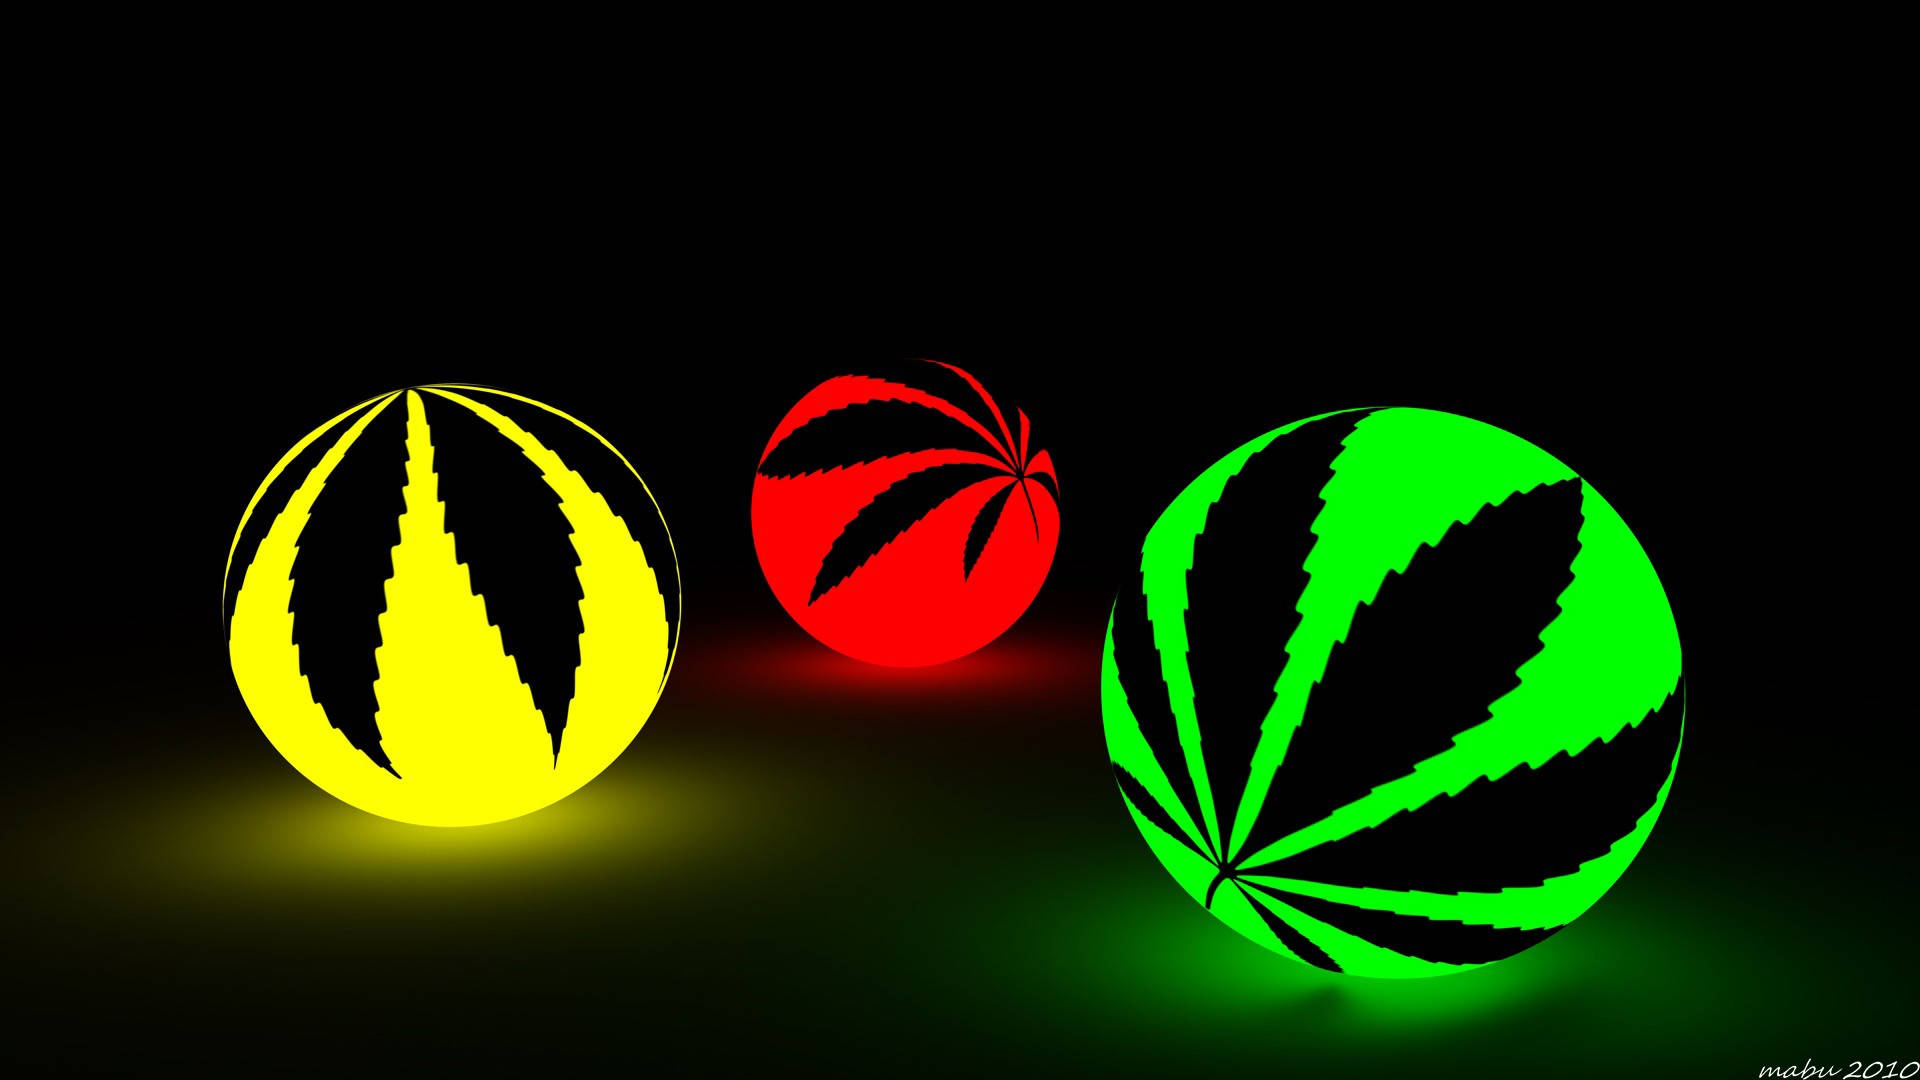 Marijuana Leaf Live Wallpaper: Green Cannabis in the Jedi Style DMA 82977-B  - free download